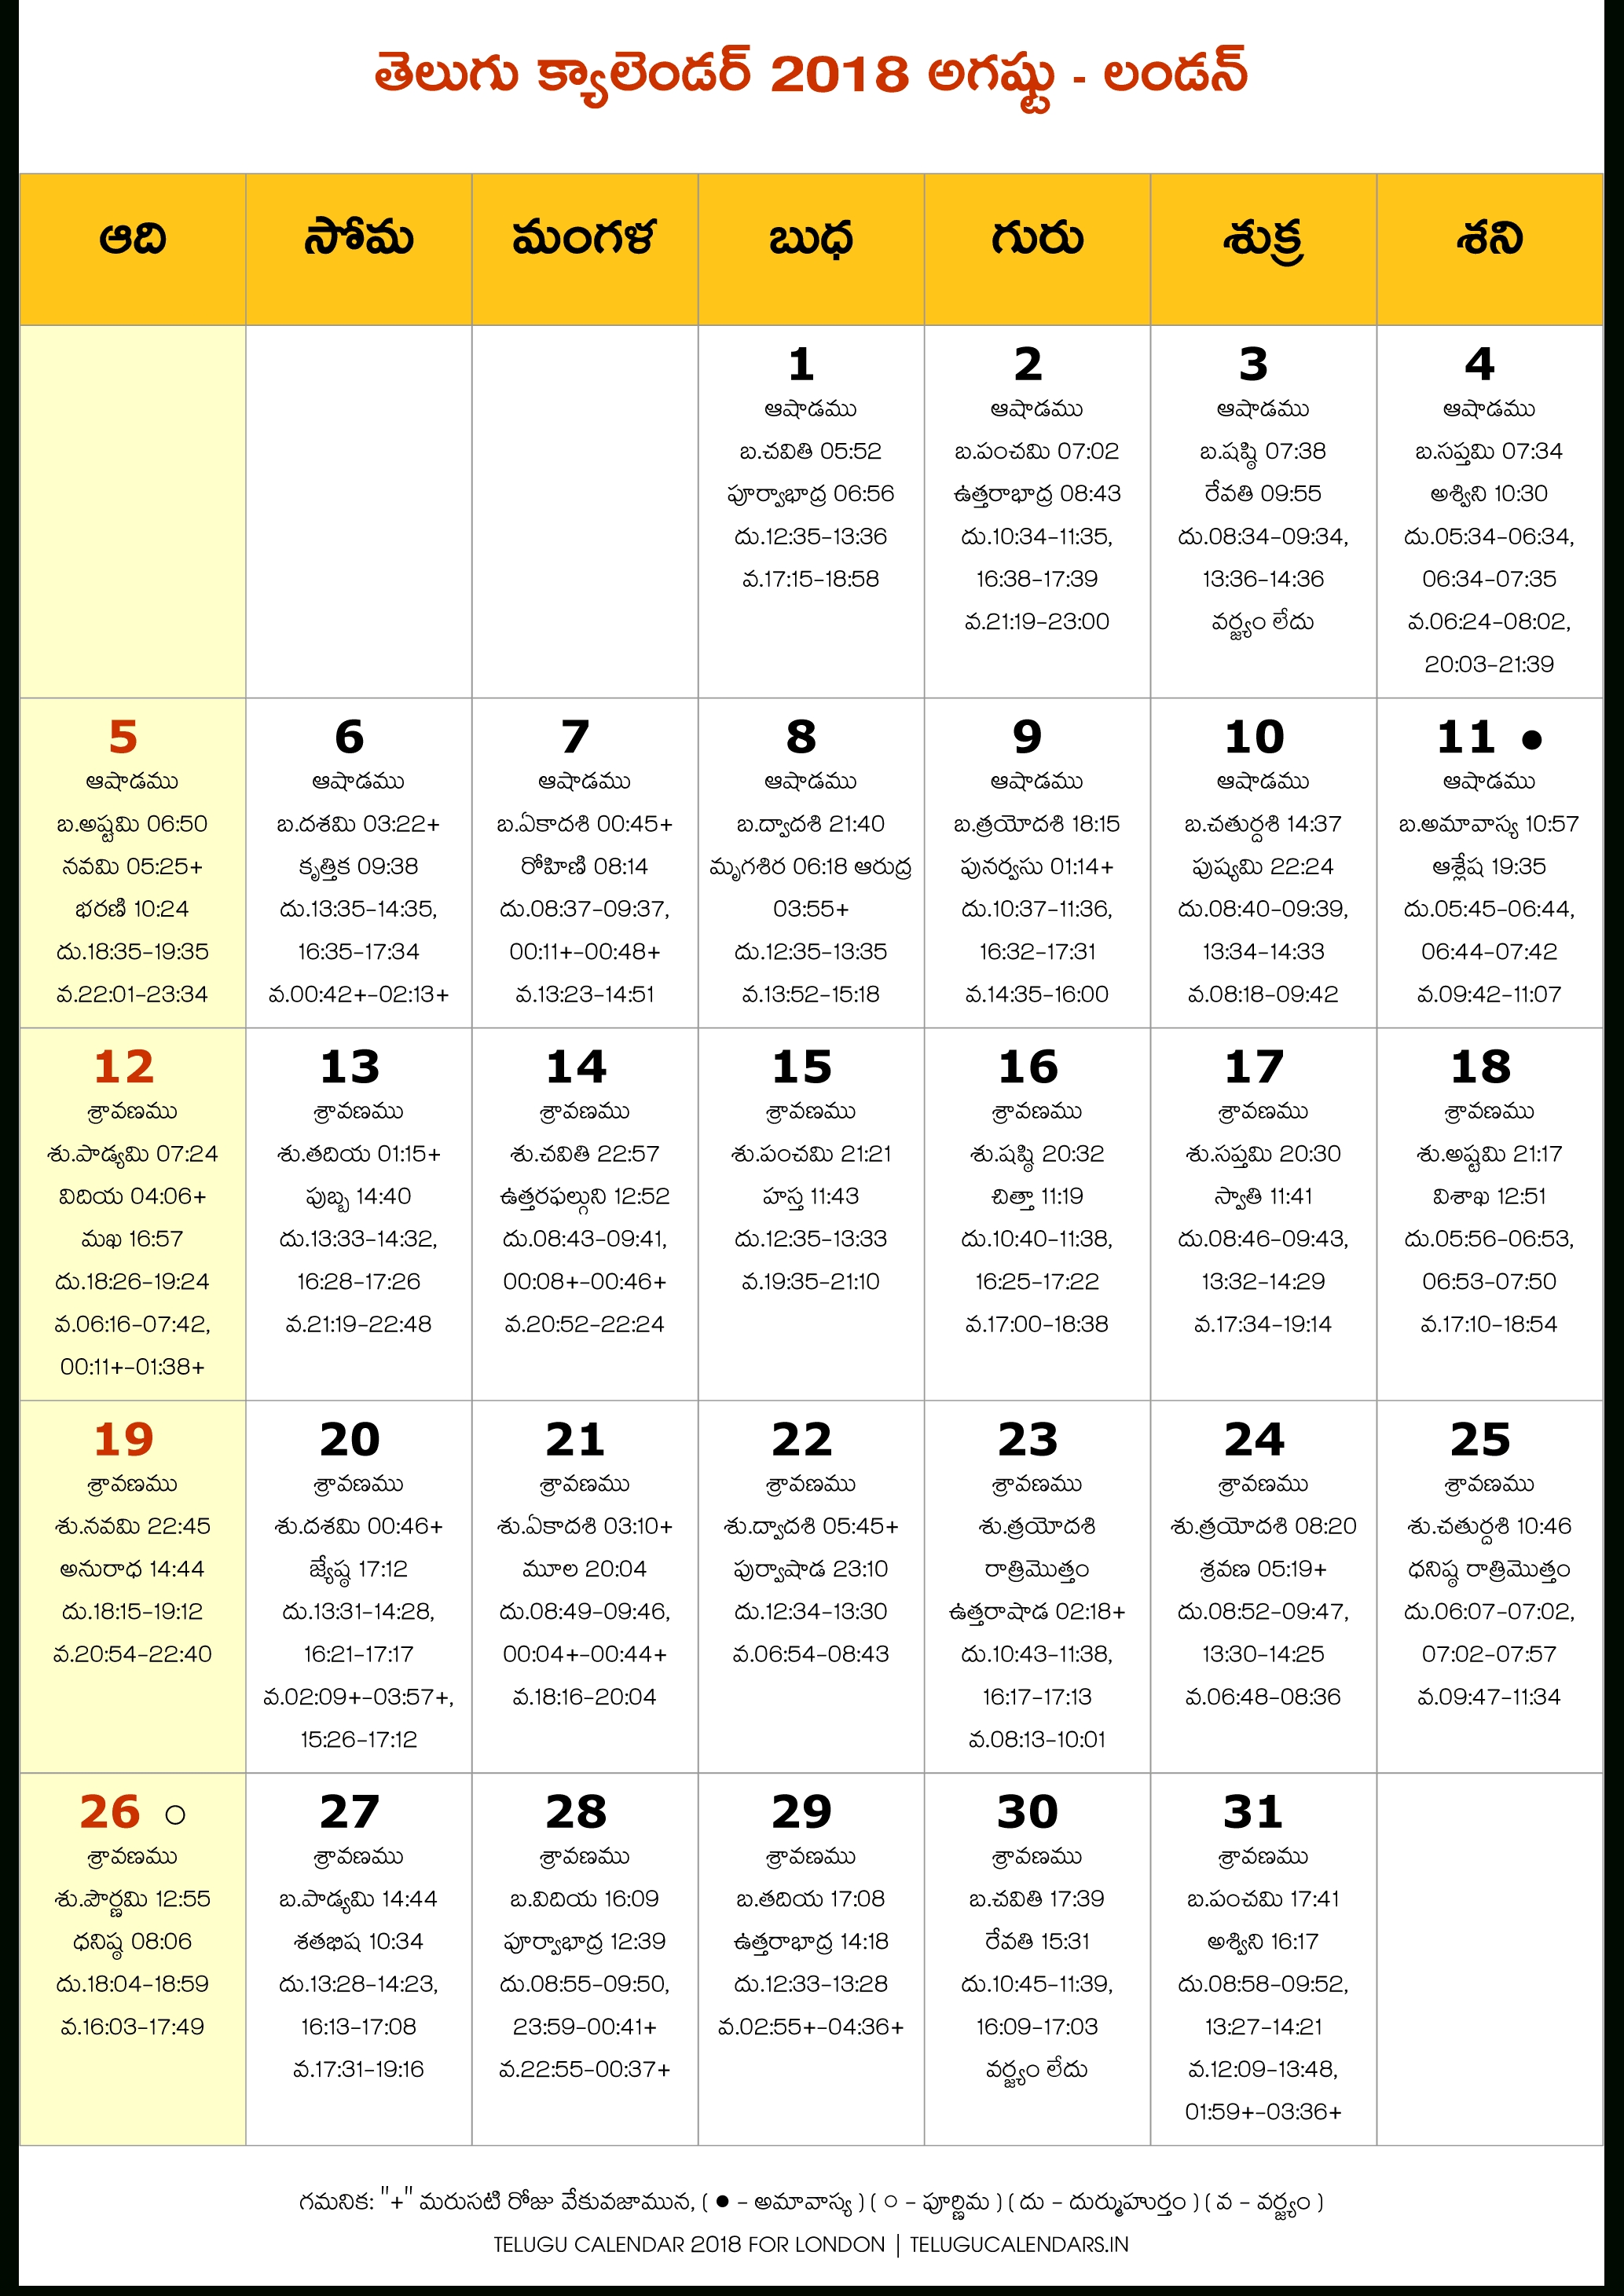 Telugu Calendar 2018 With Tithi Festivals Holidays List - Modern regarding 1993 Hindi Calendar By Tithi Patttra